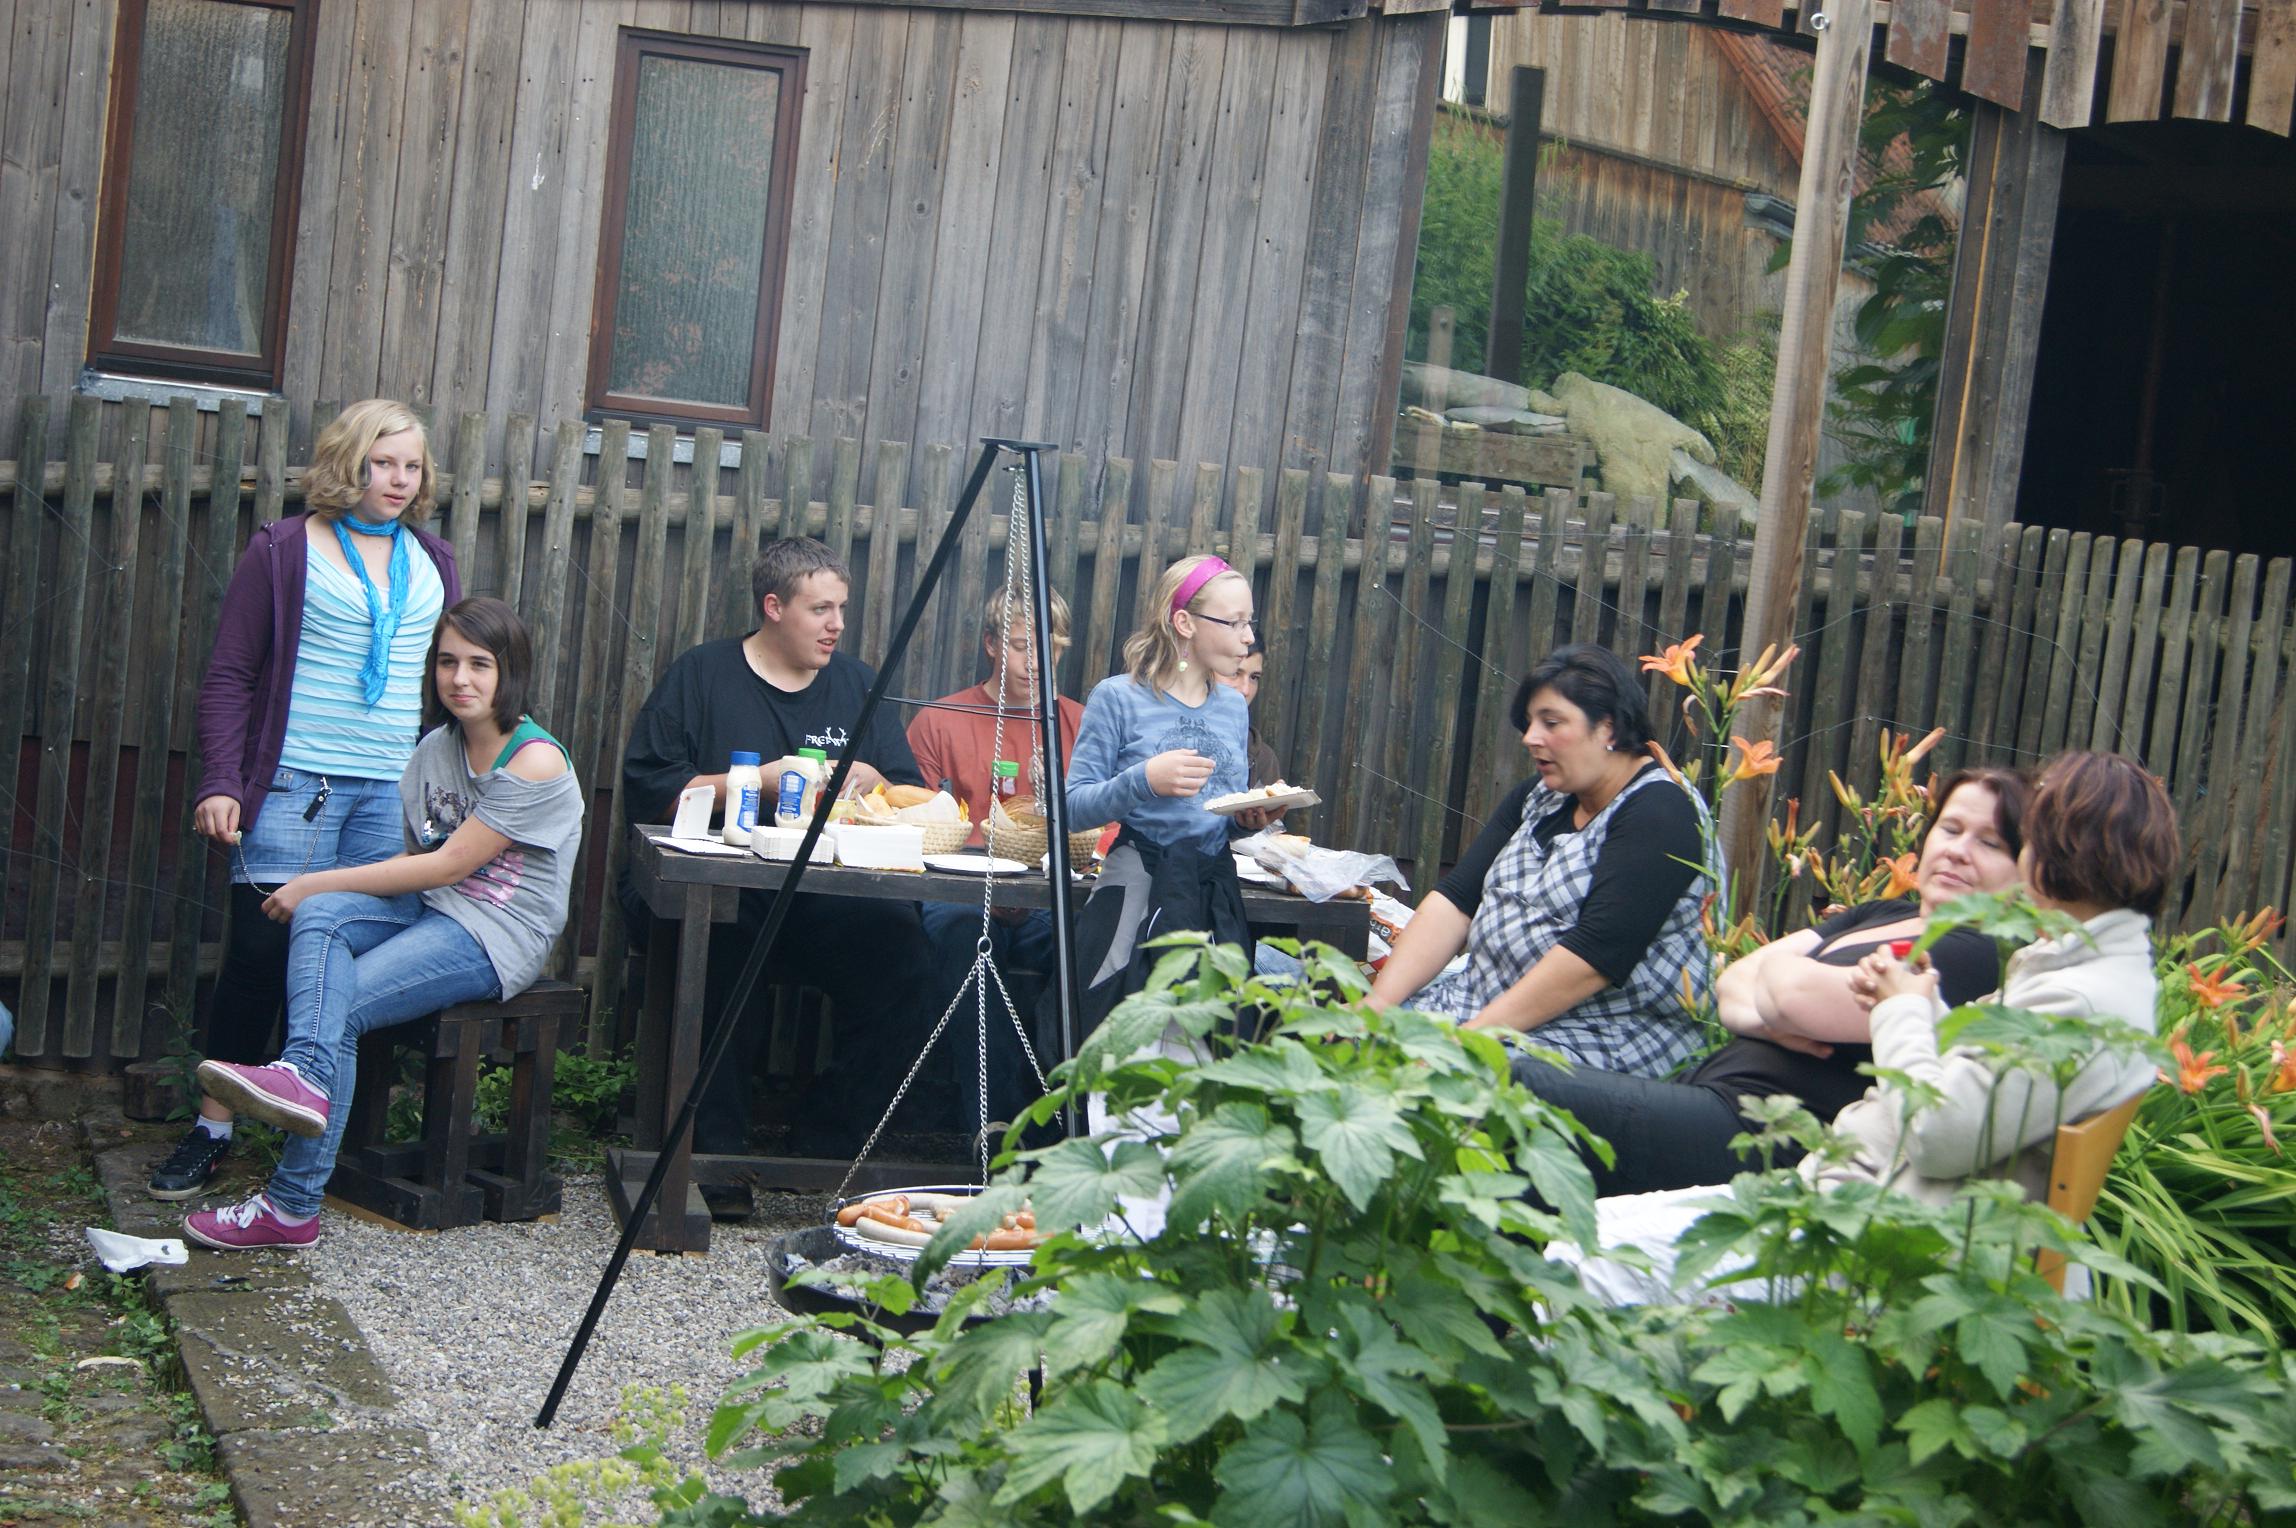  Jugendliche grillen im Garten des Jugendcafés ChillOut 